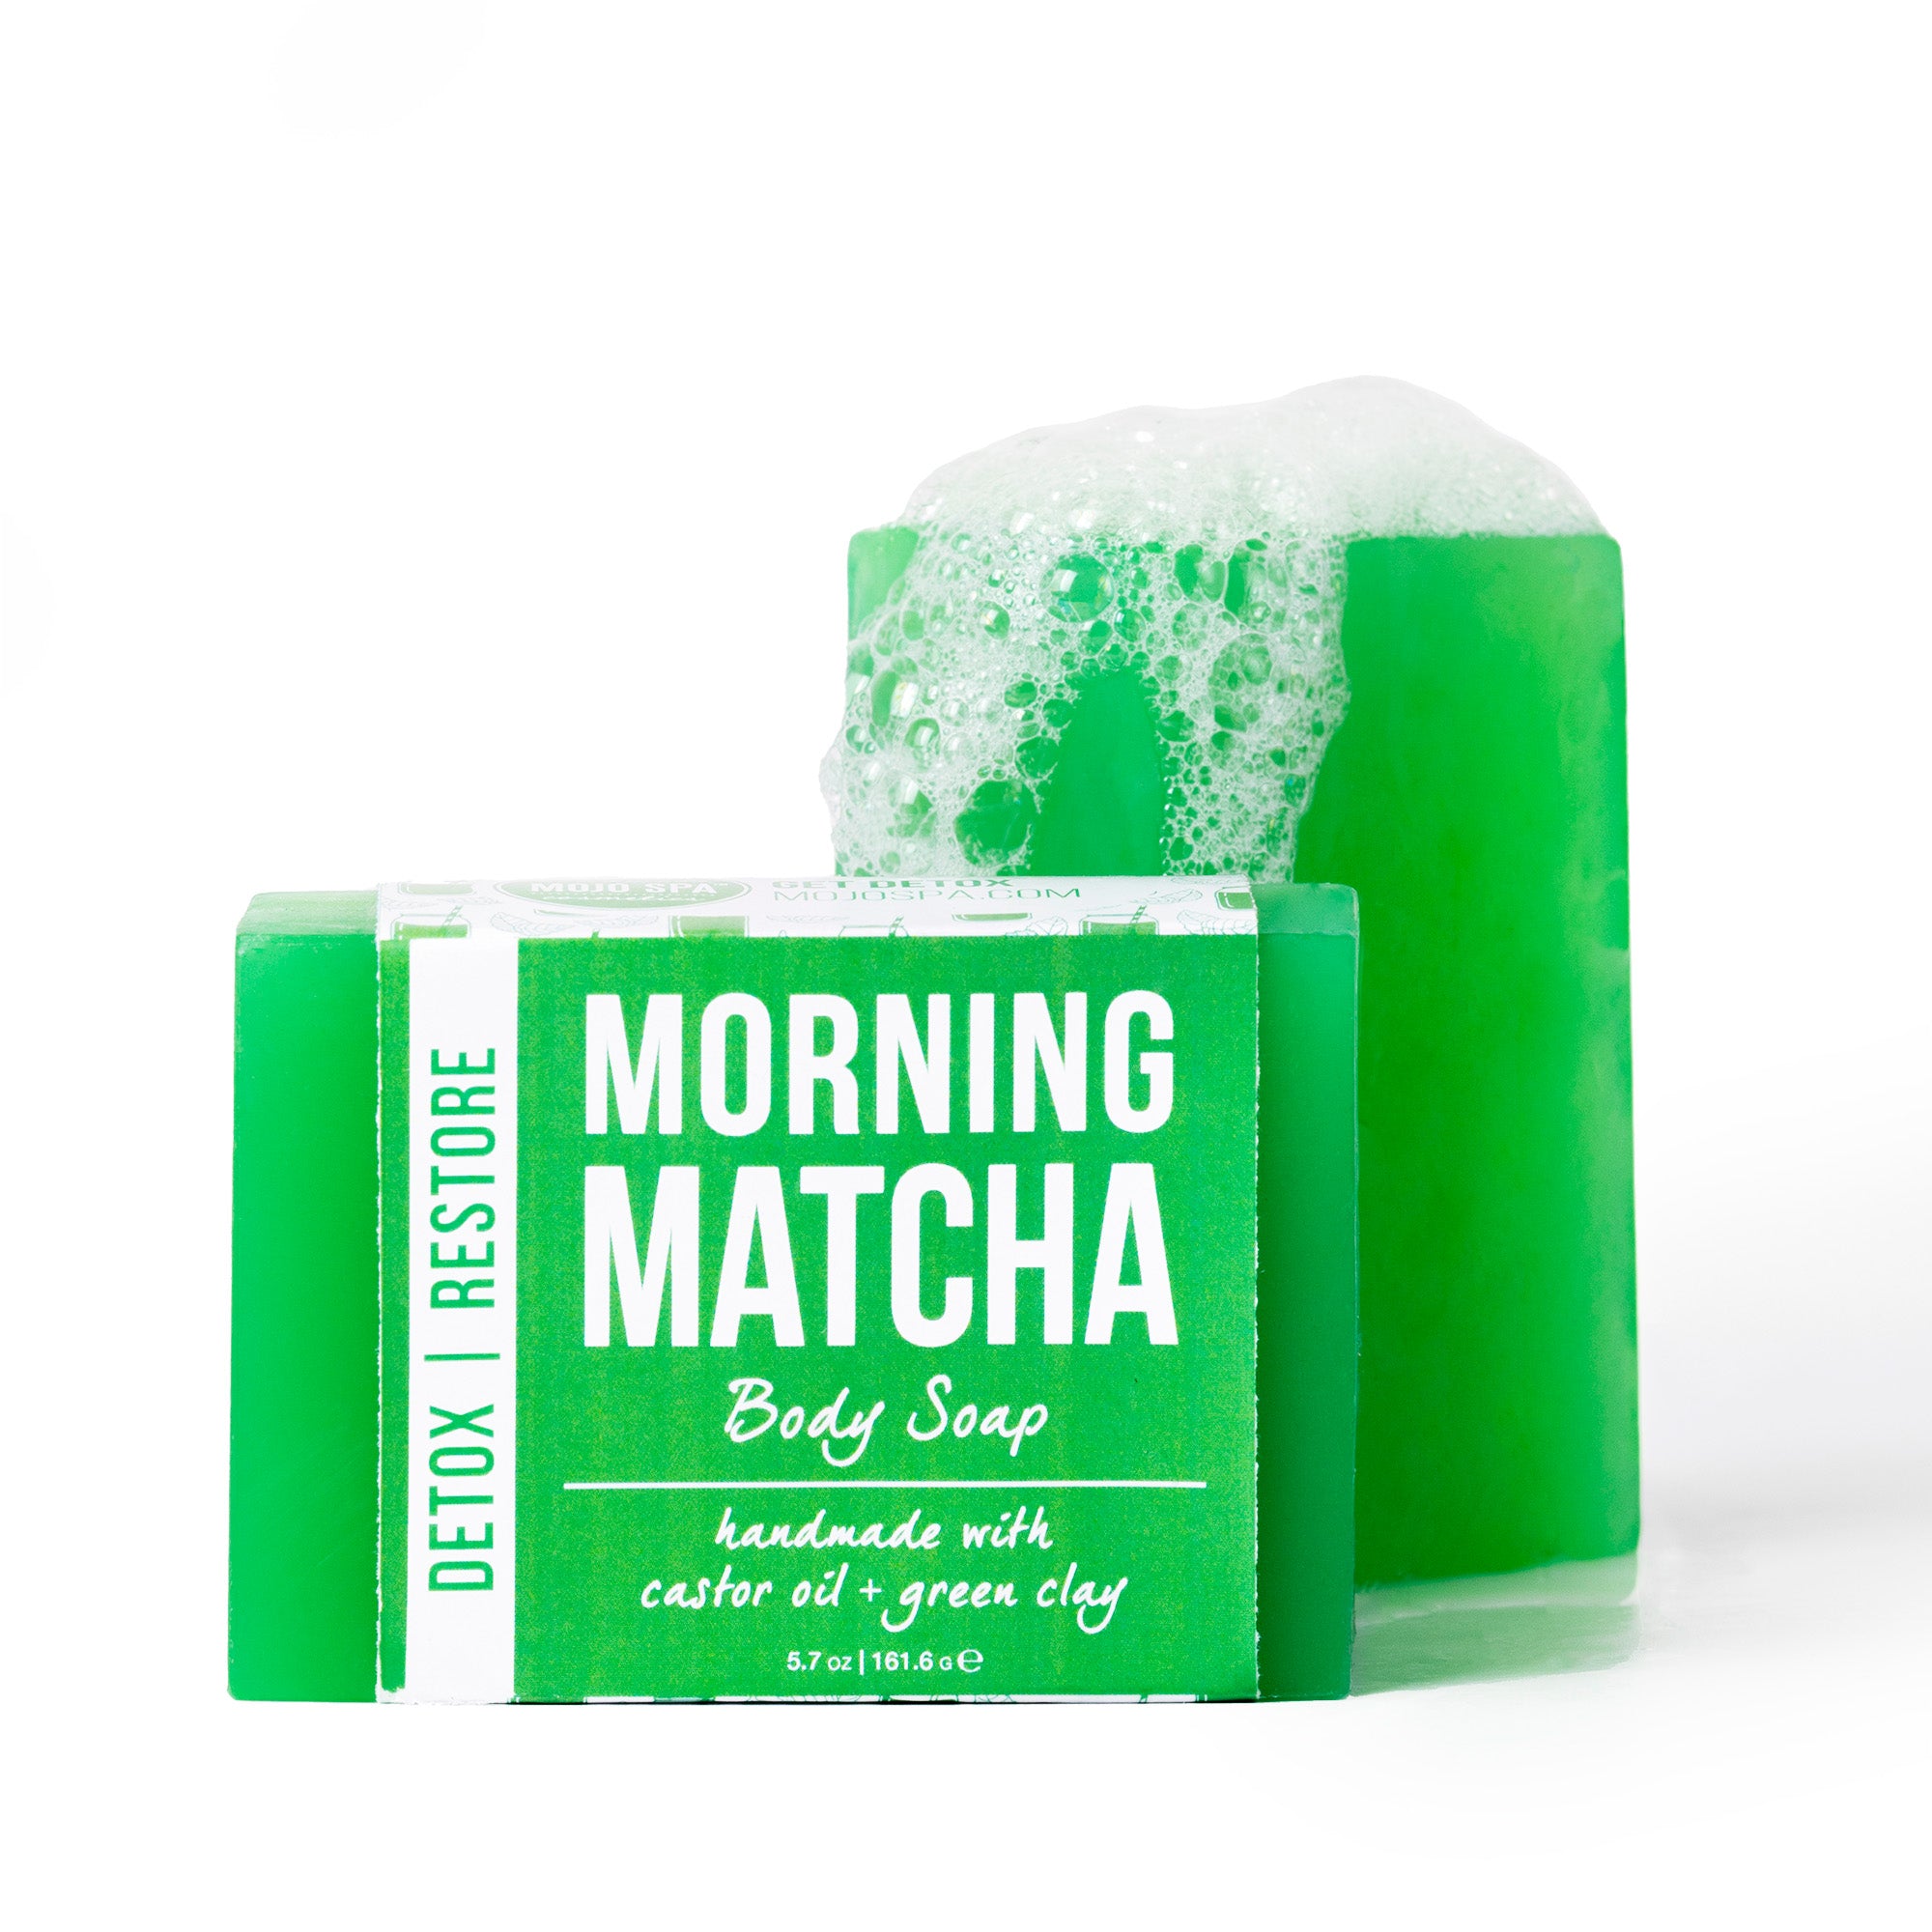 Morning Matcha Body Soap